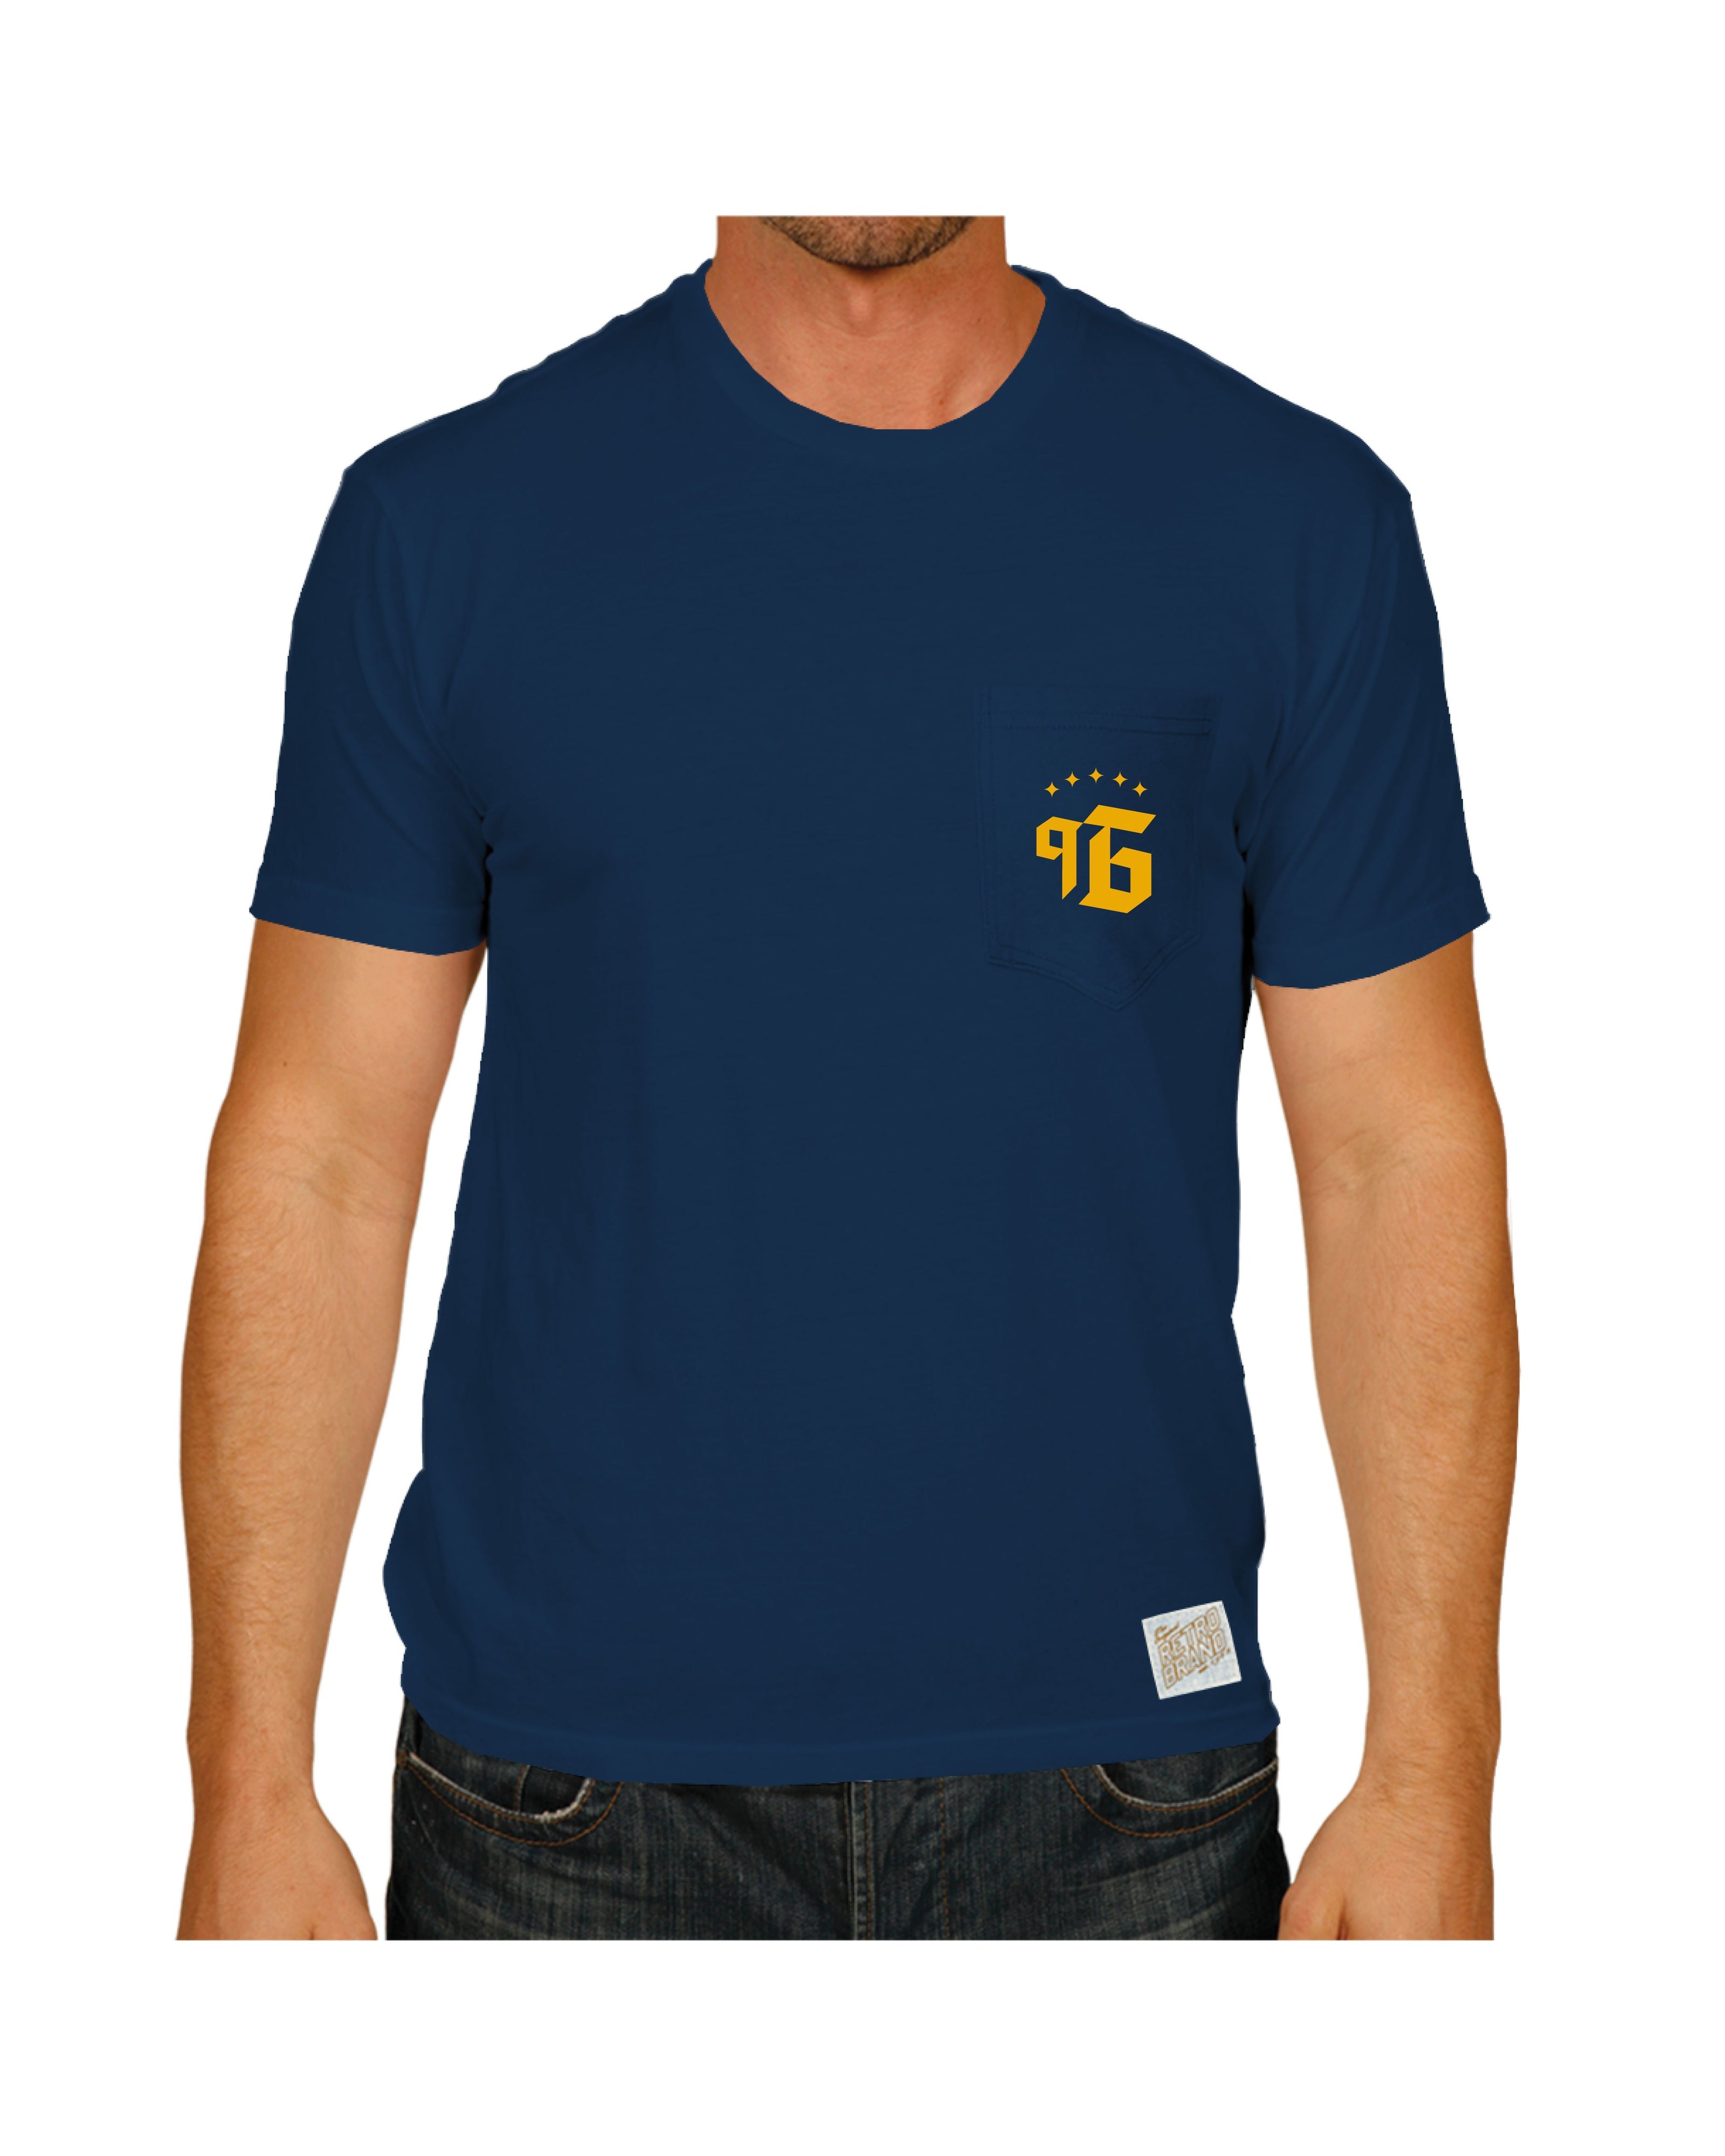 La Galaxy Original Retro Ninety 6 Short Sleeve Navy T Shirt S